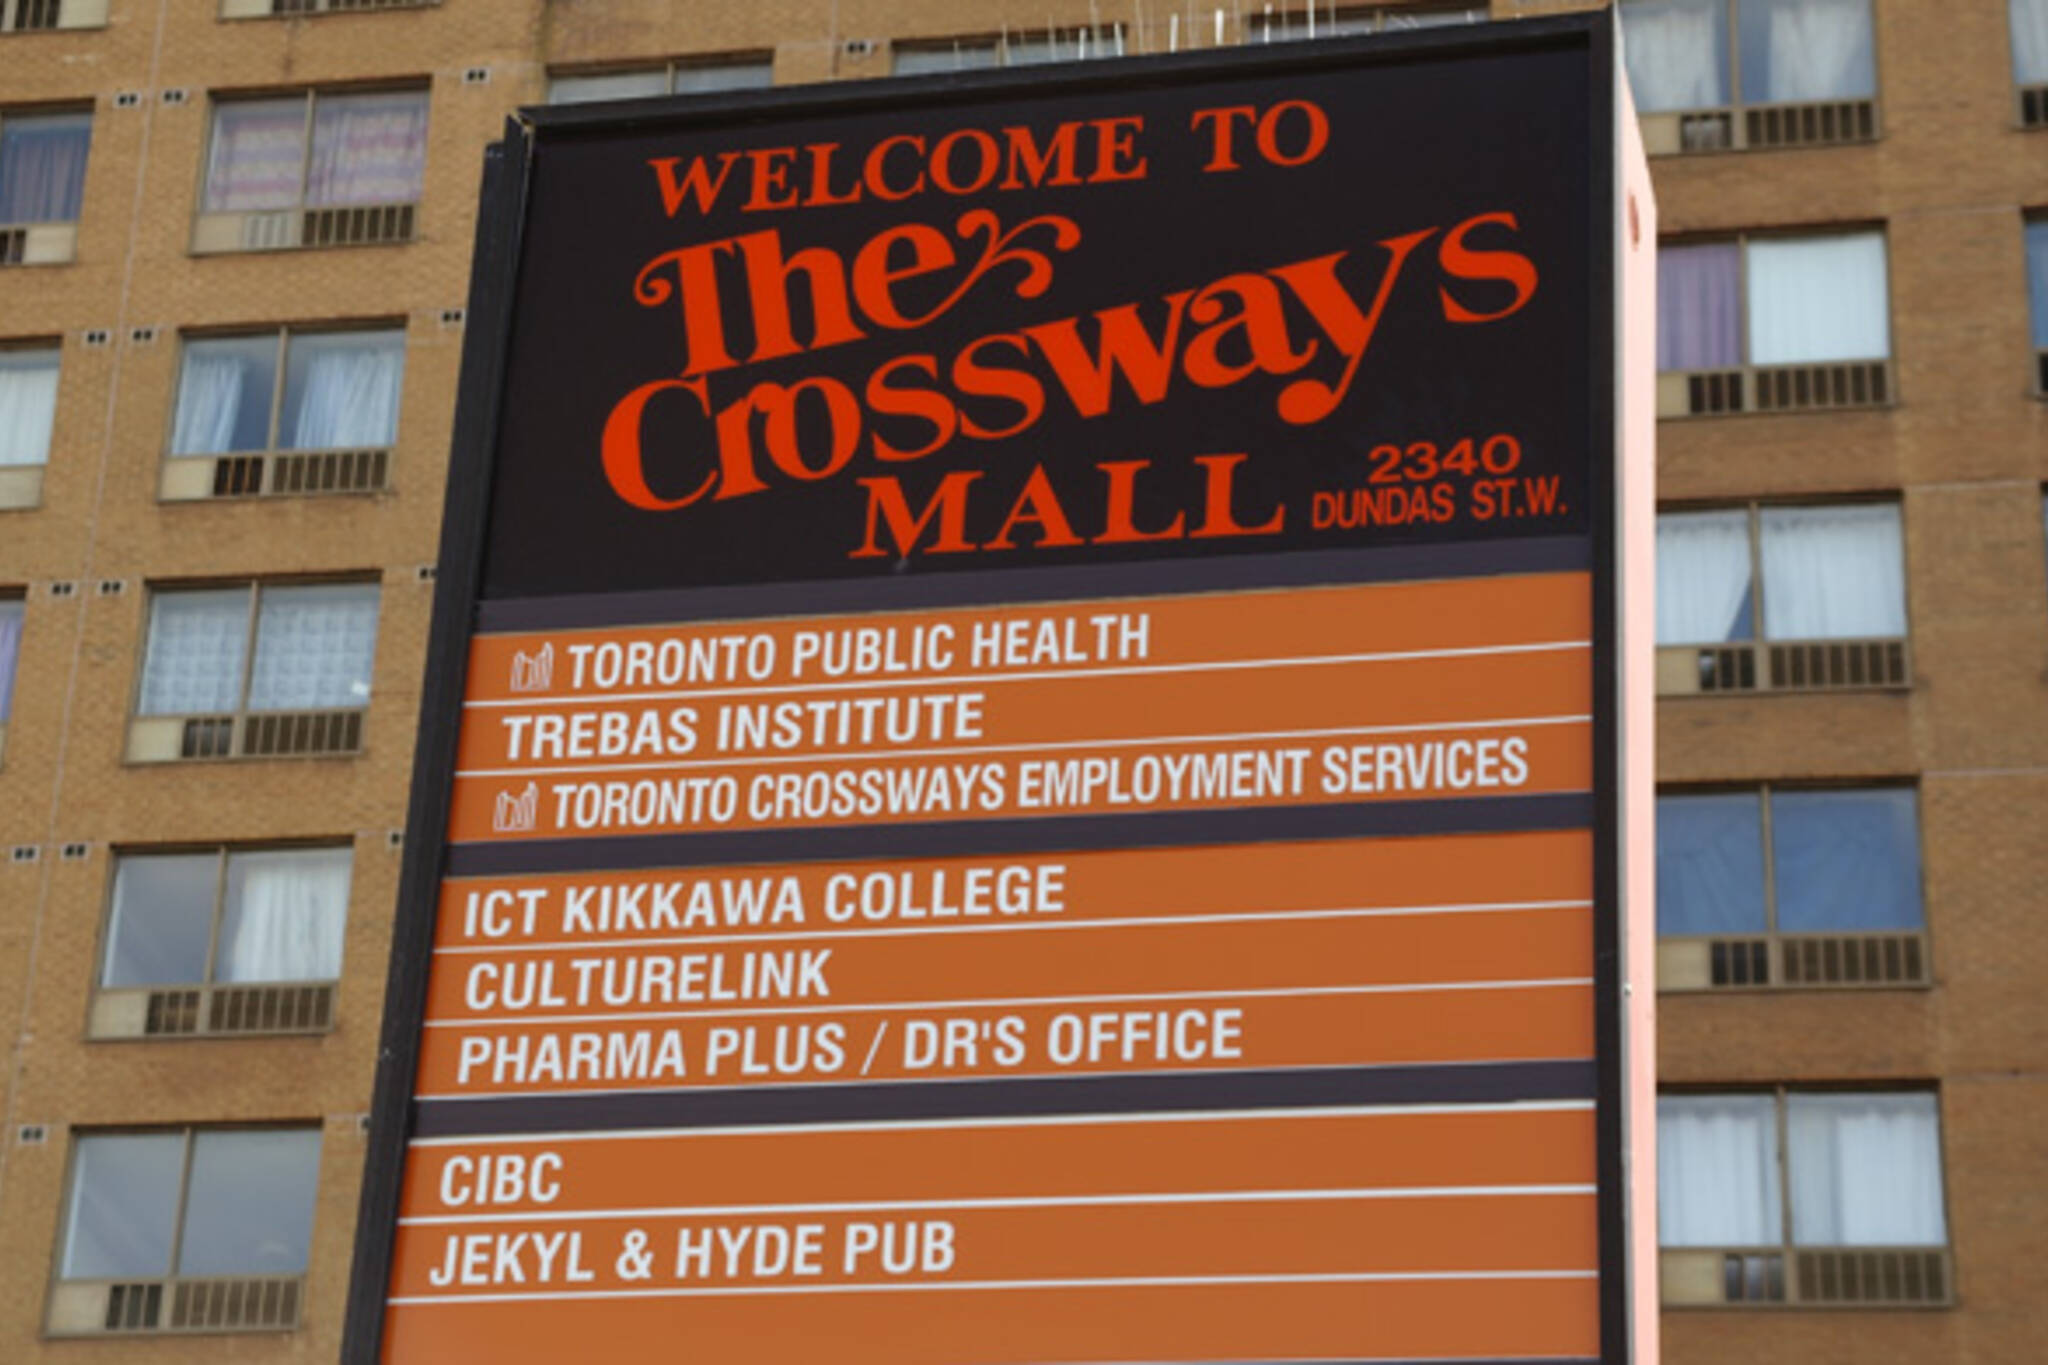 Crossways Mall Toronto